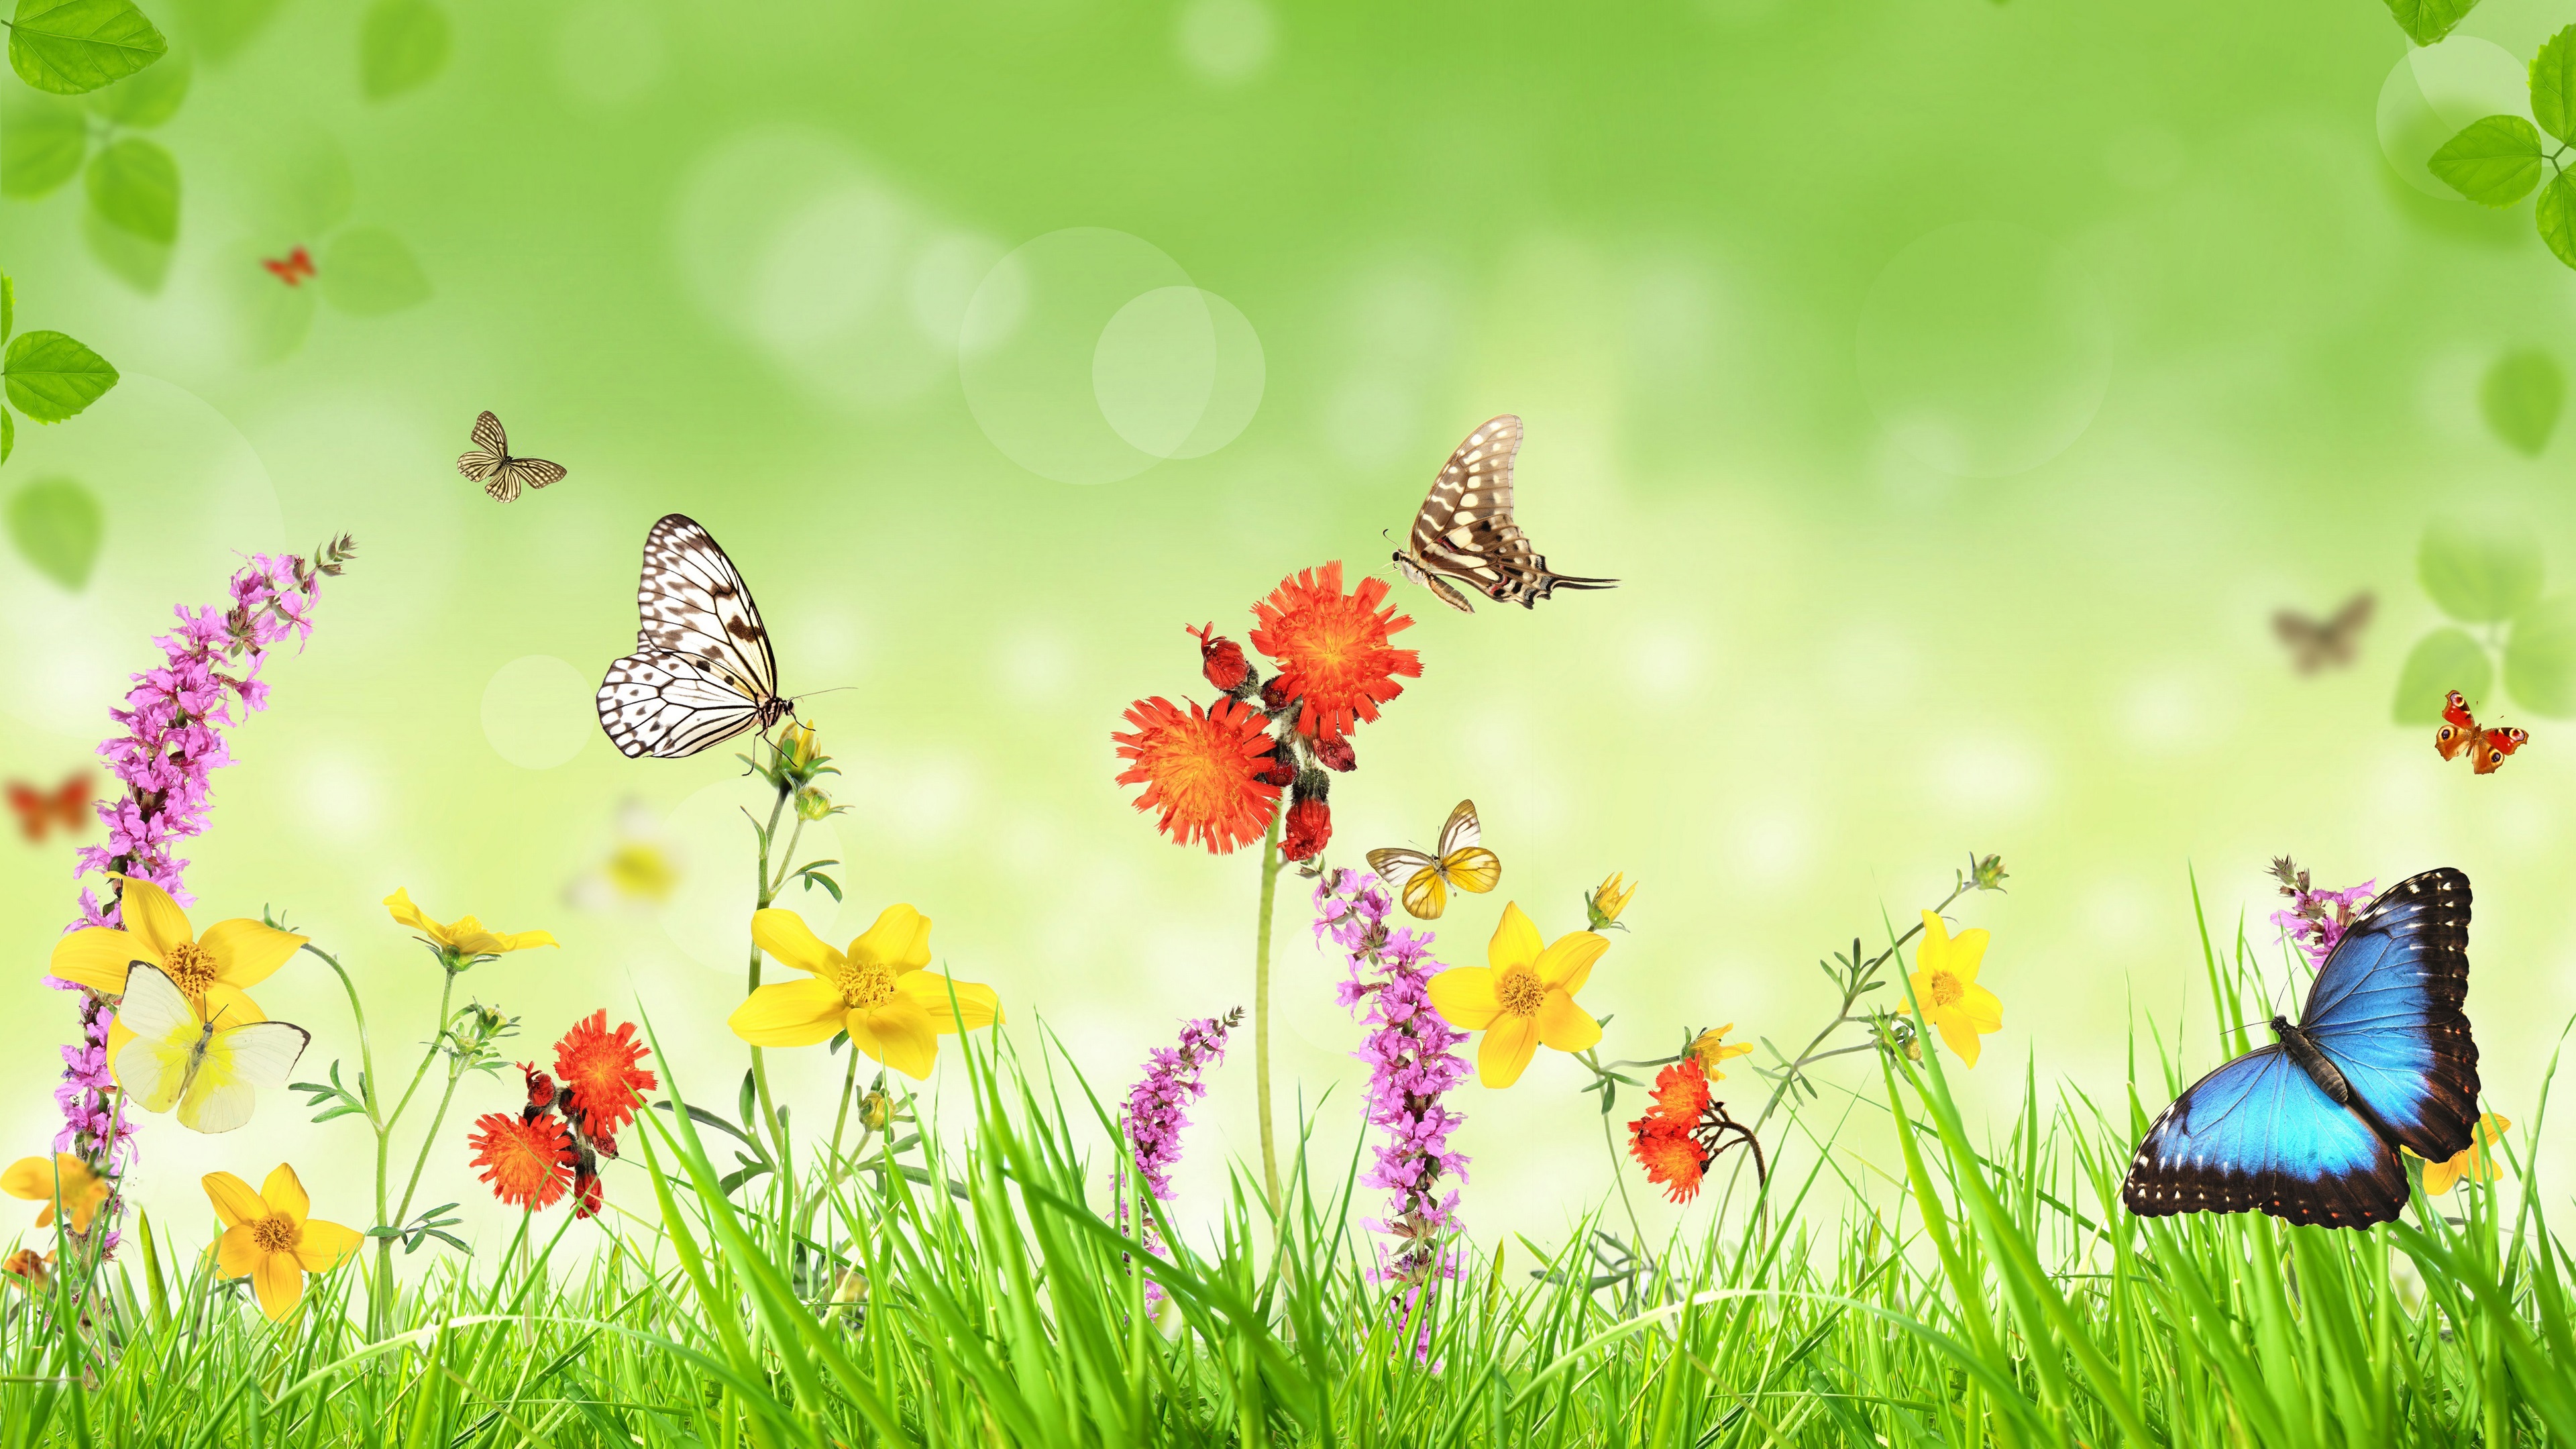 Spring, flowers, grass, butterfly, green background, creative design  wallpaper | creative and fantasy | Wallpaper Better